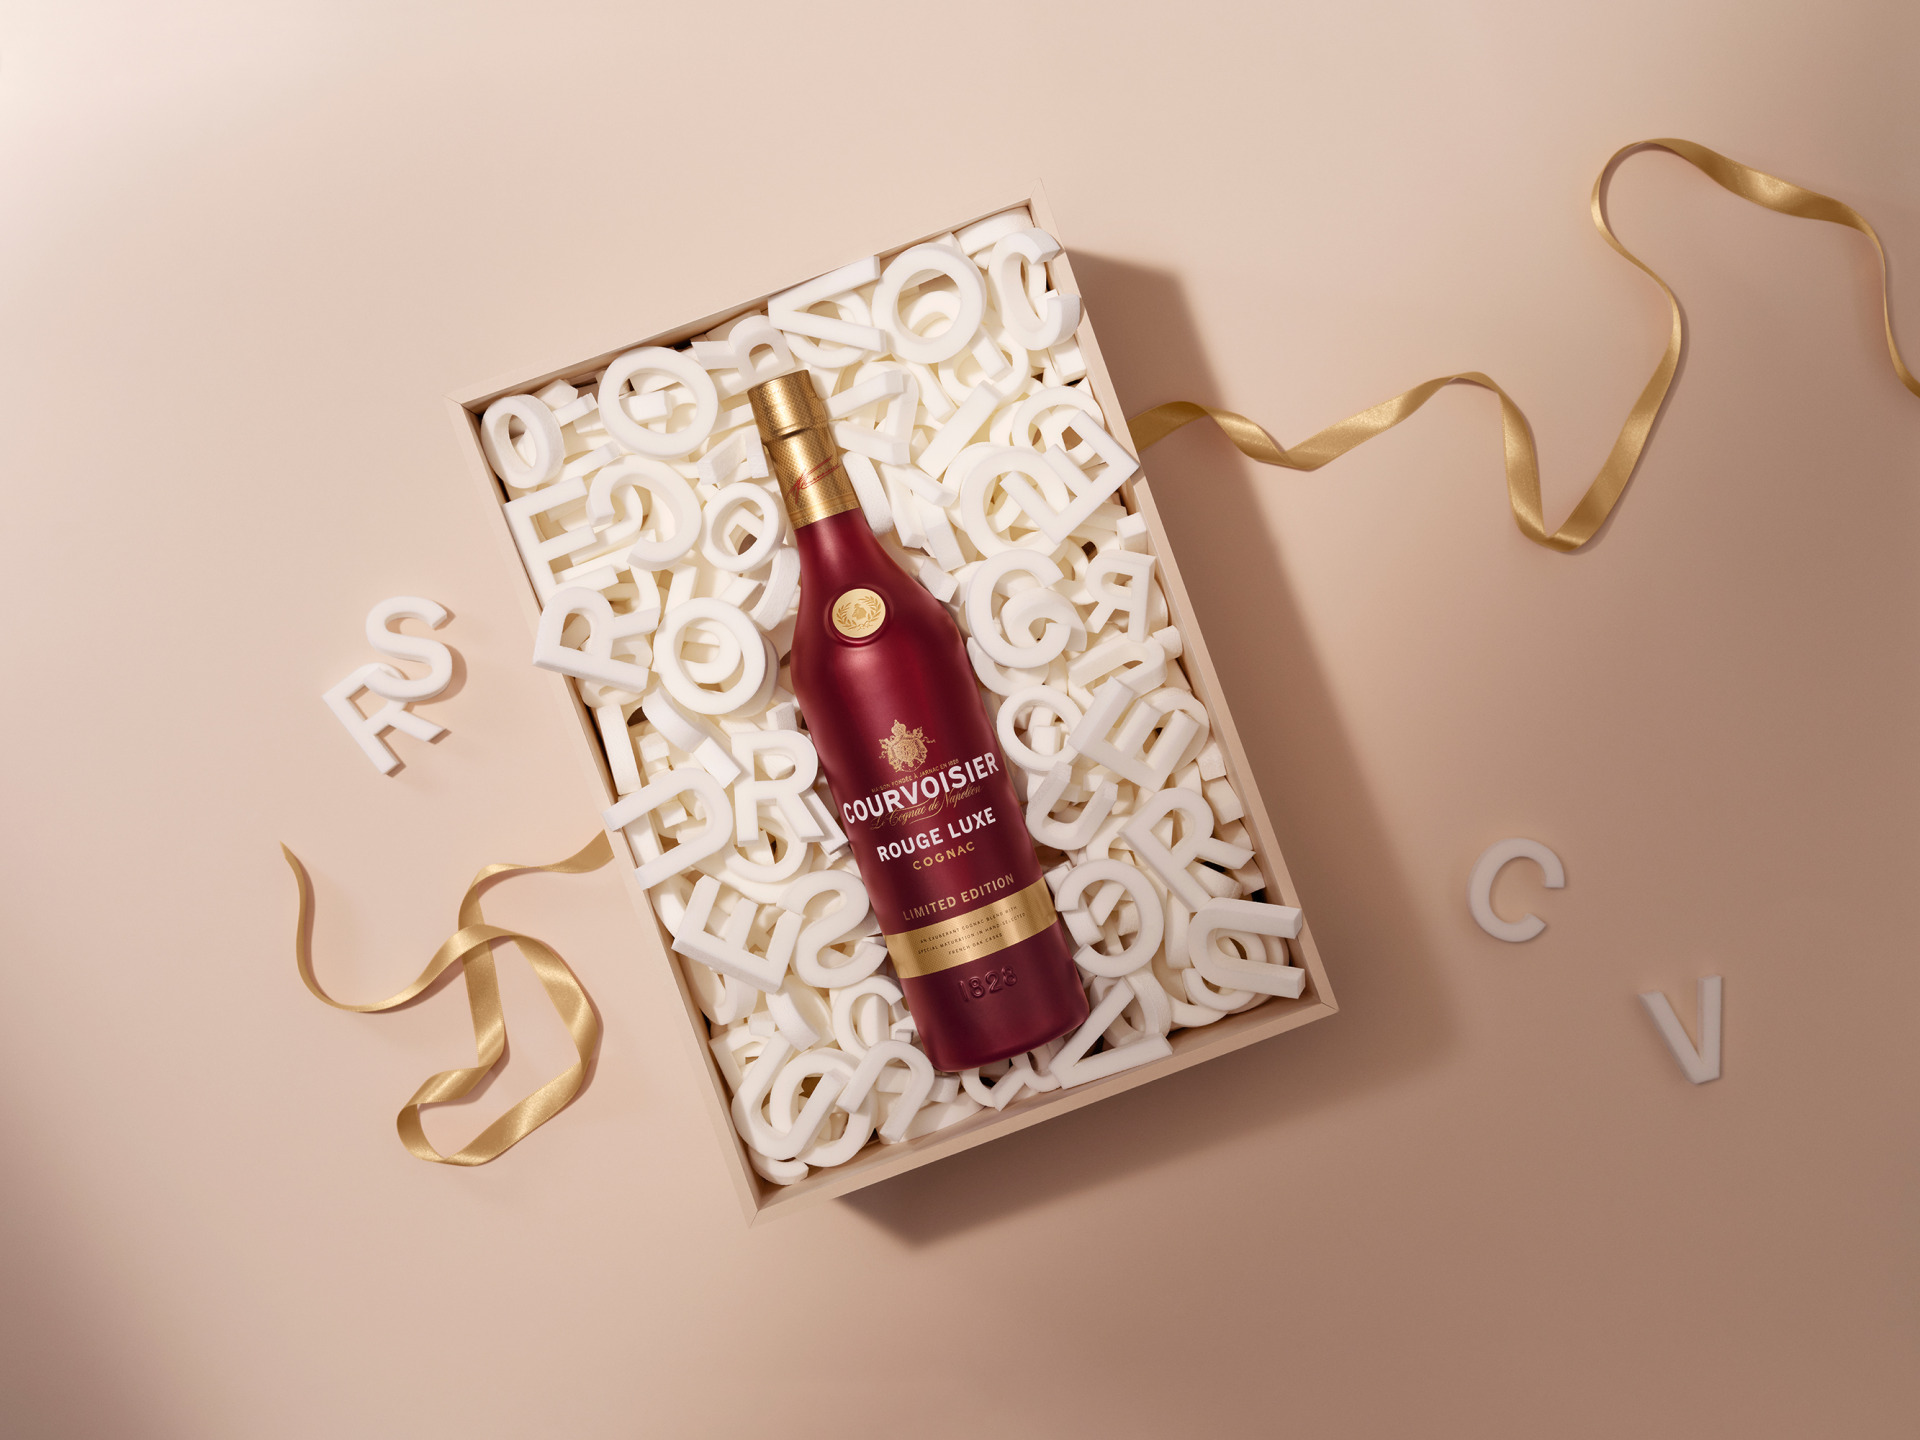 Courvoisier Rouge Luxe Beautyshot gift